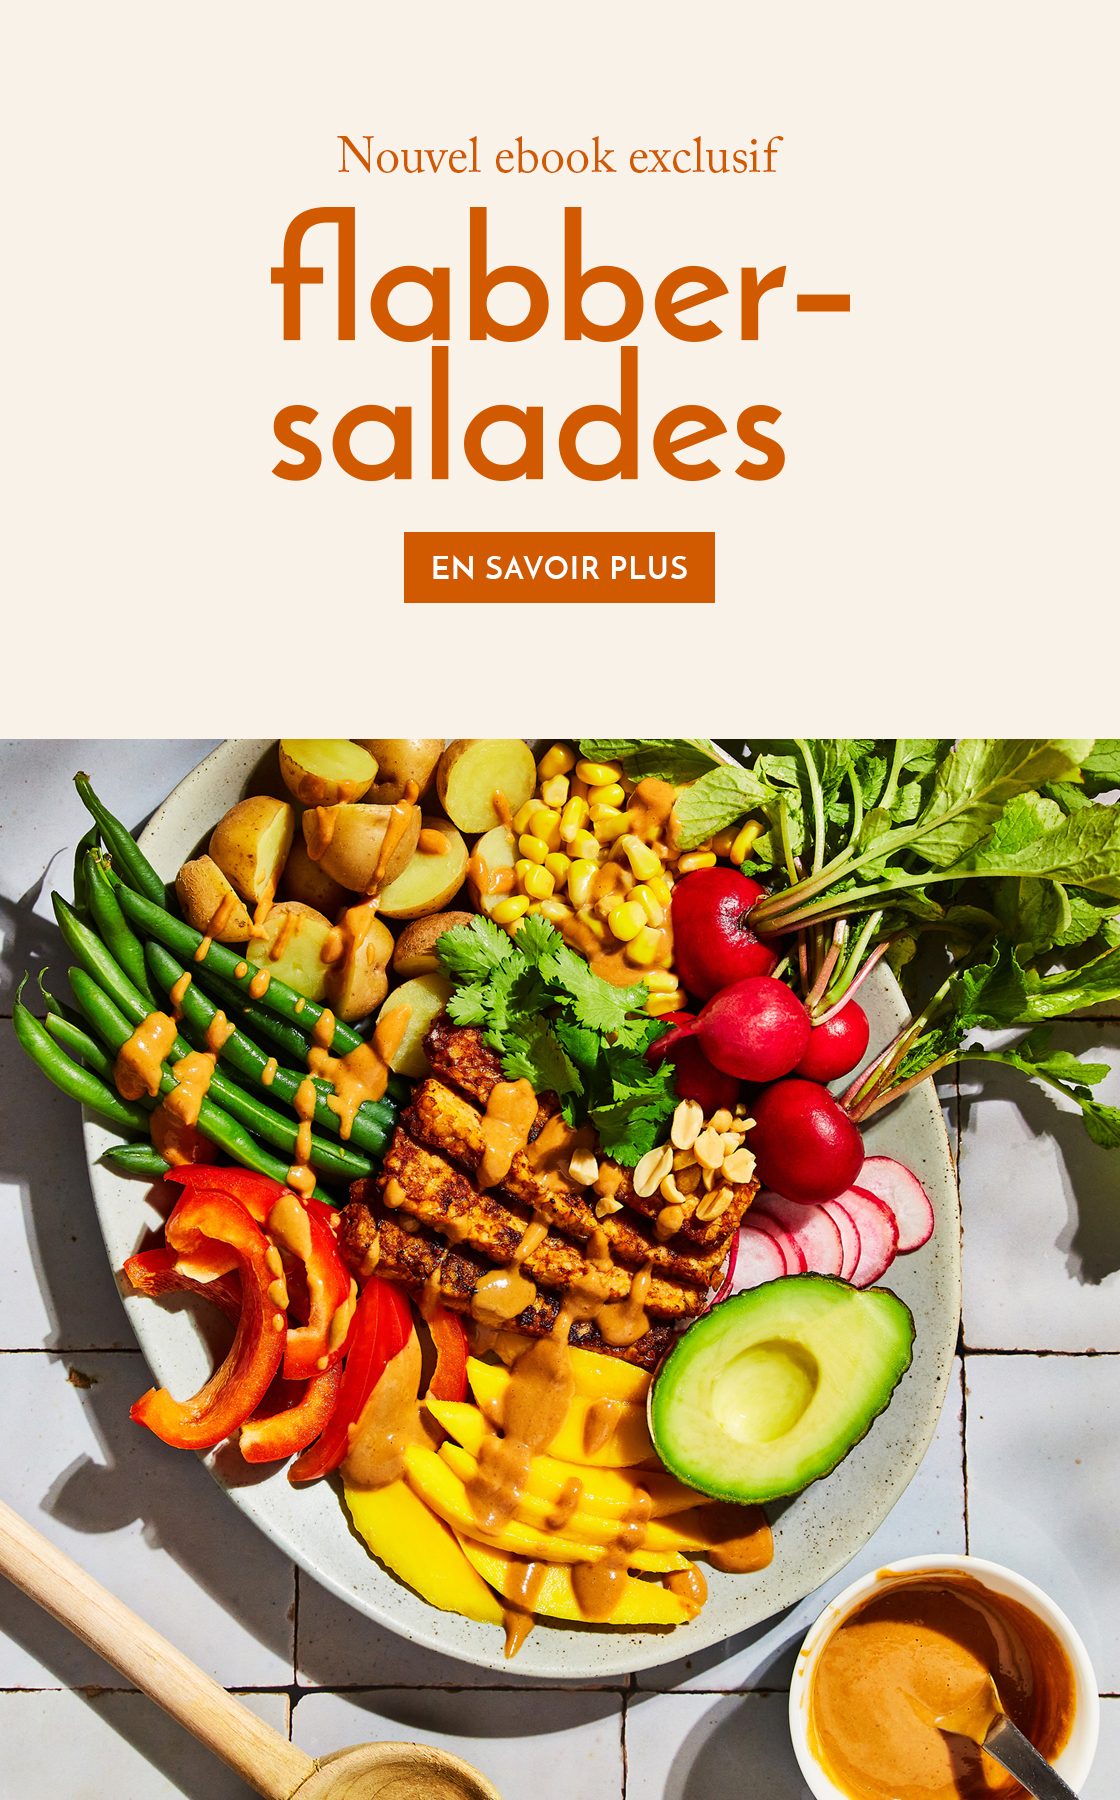 Flabber-salades bannière